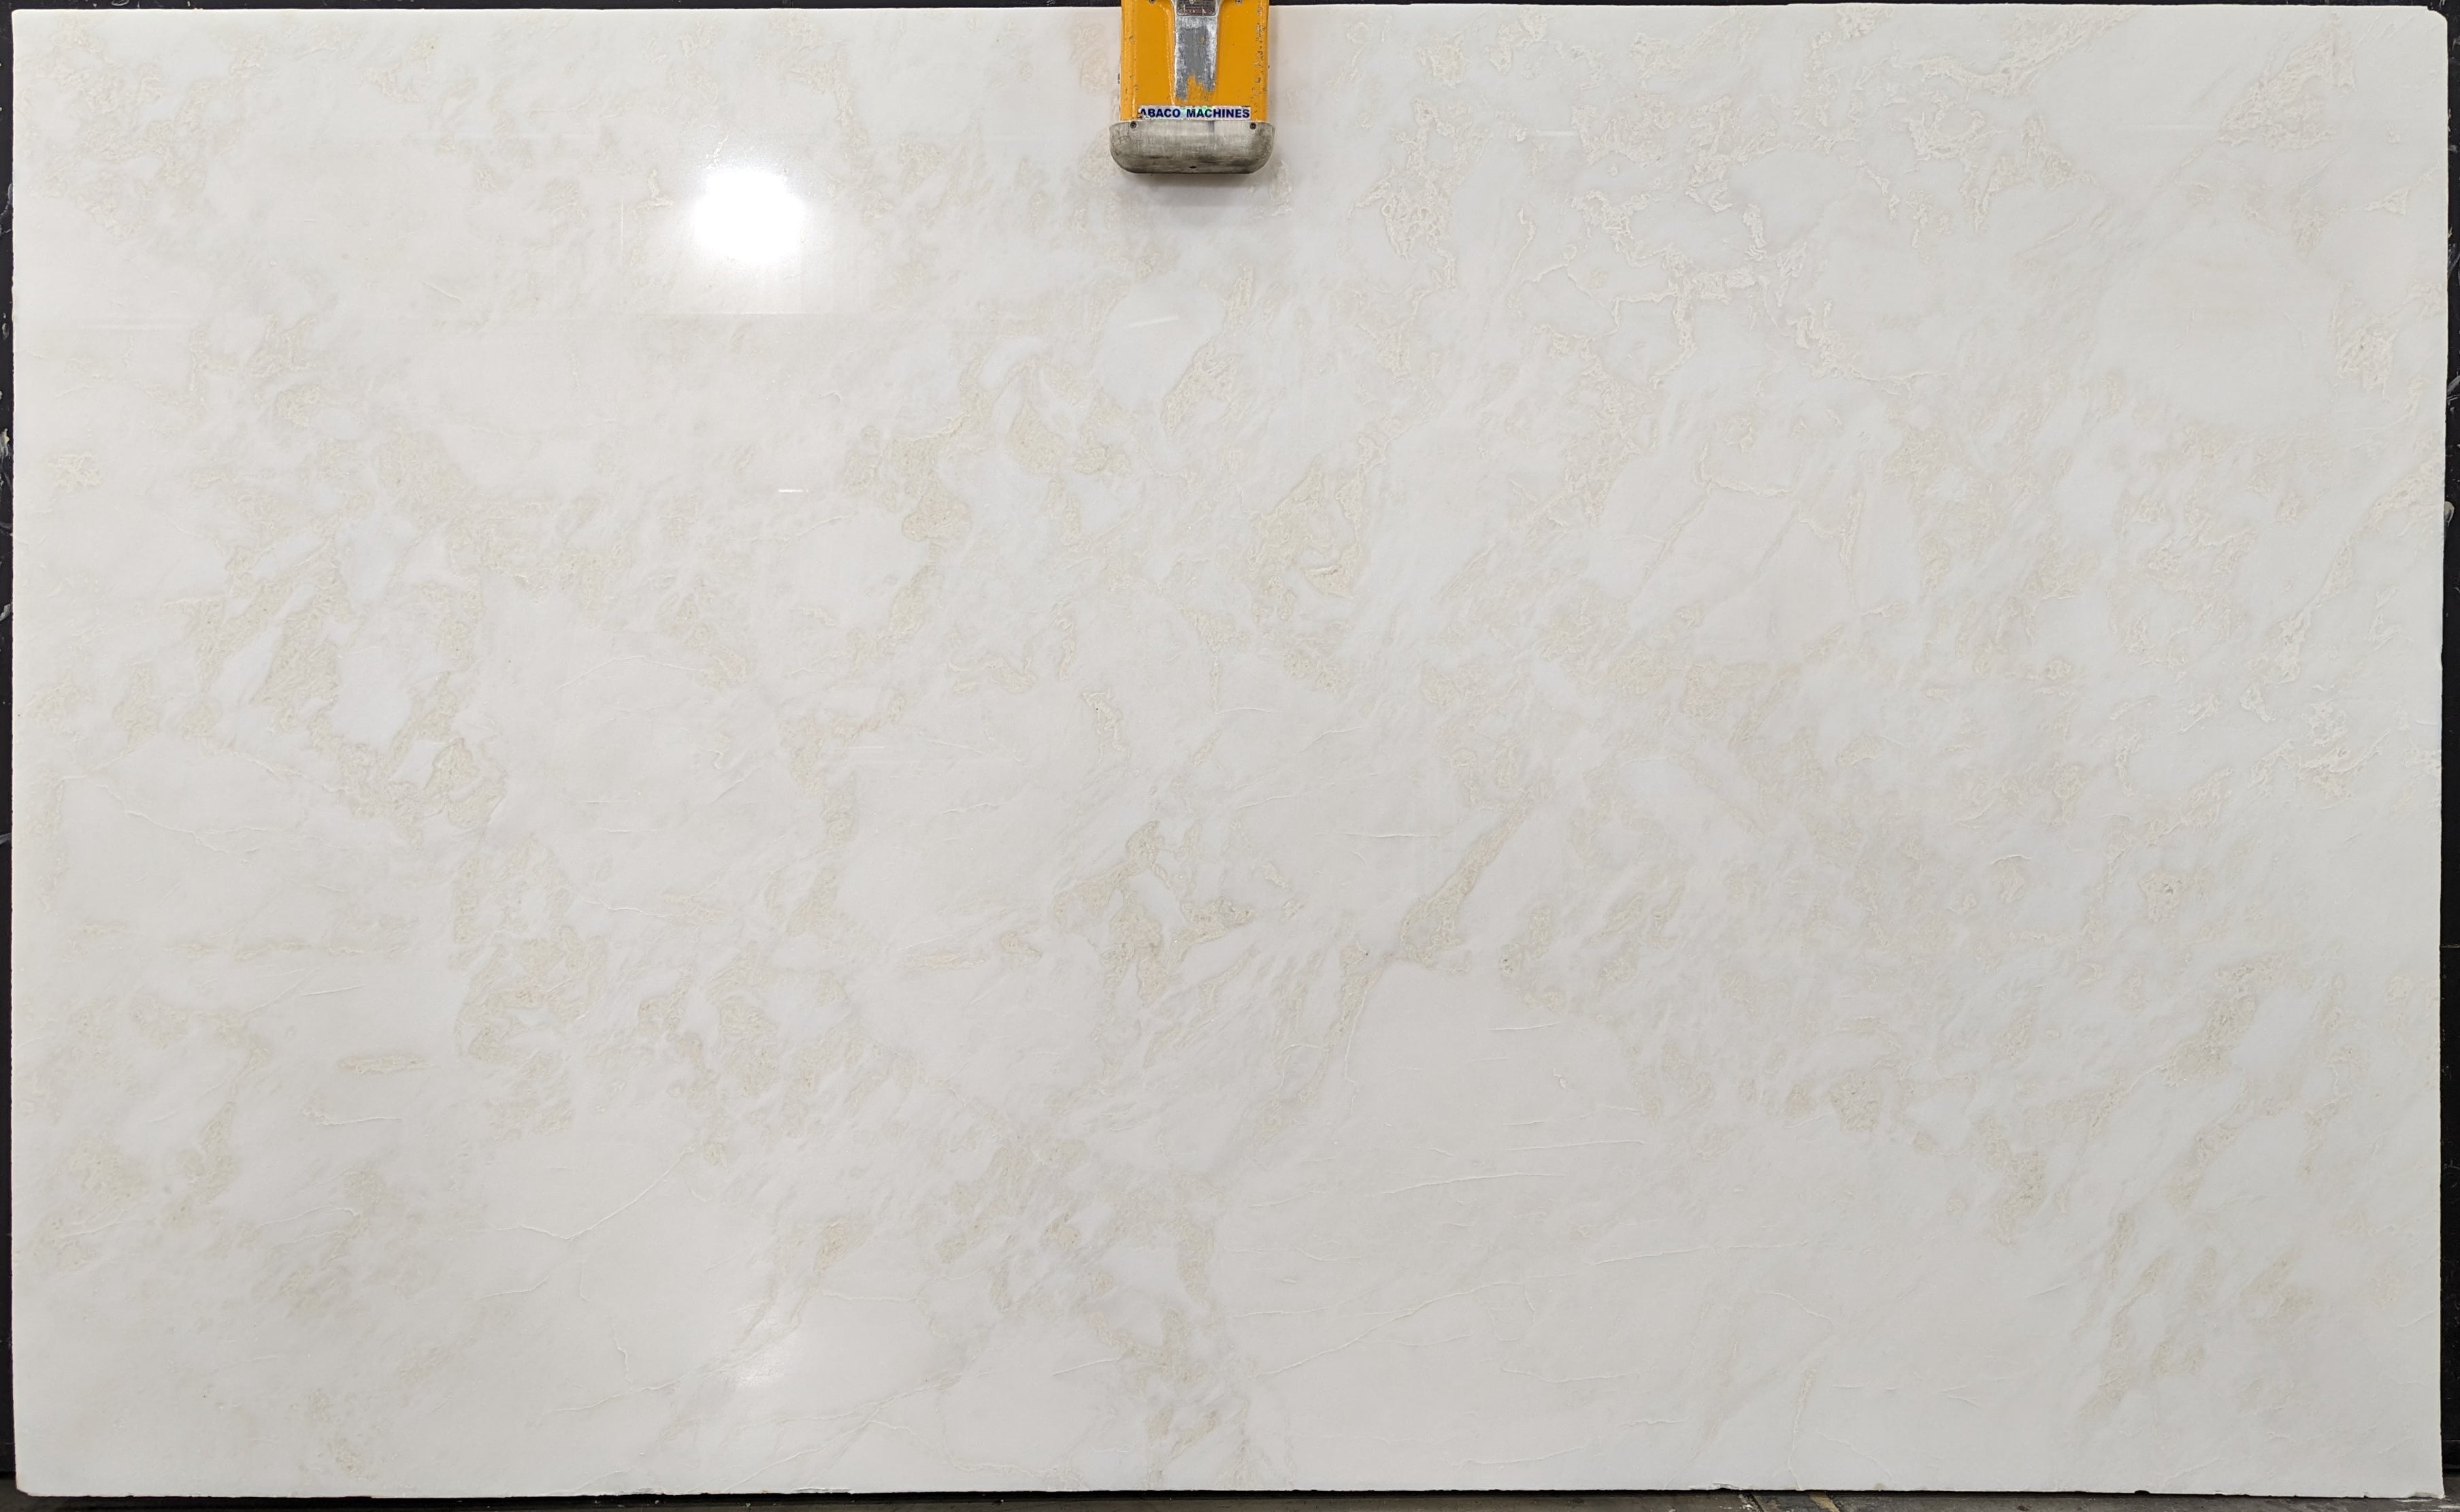  Bianco Rhino Marble Slab 3/4  Polished Stone - 6216#06 -  75x124 